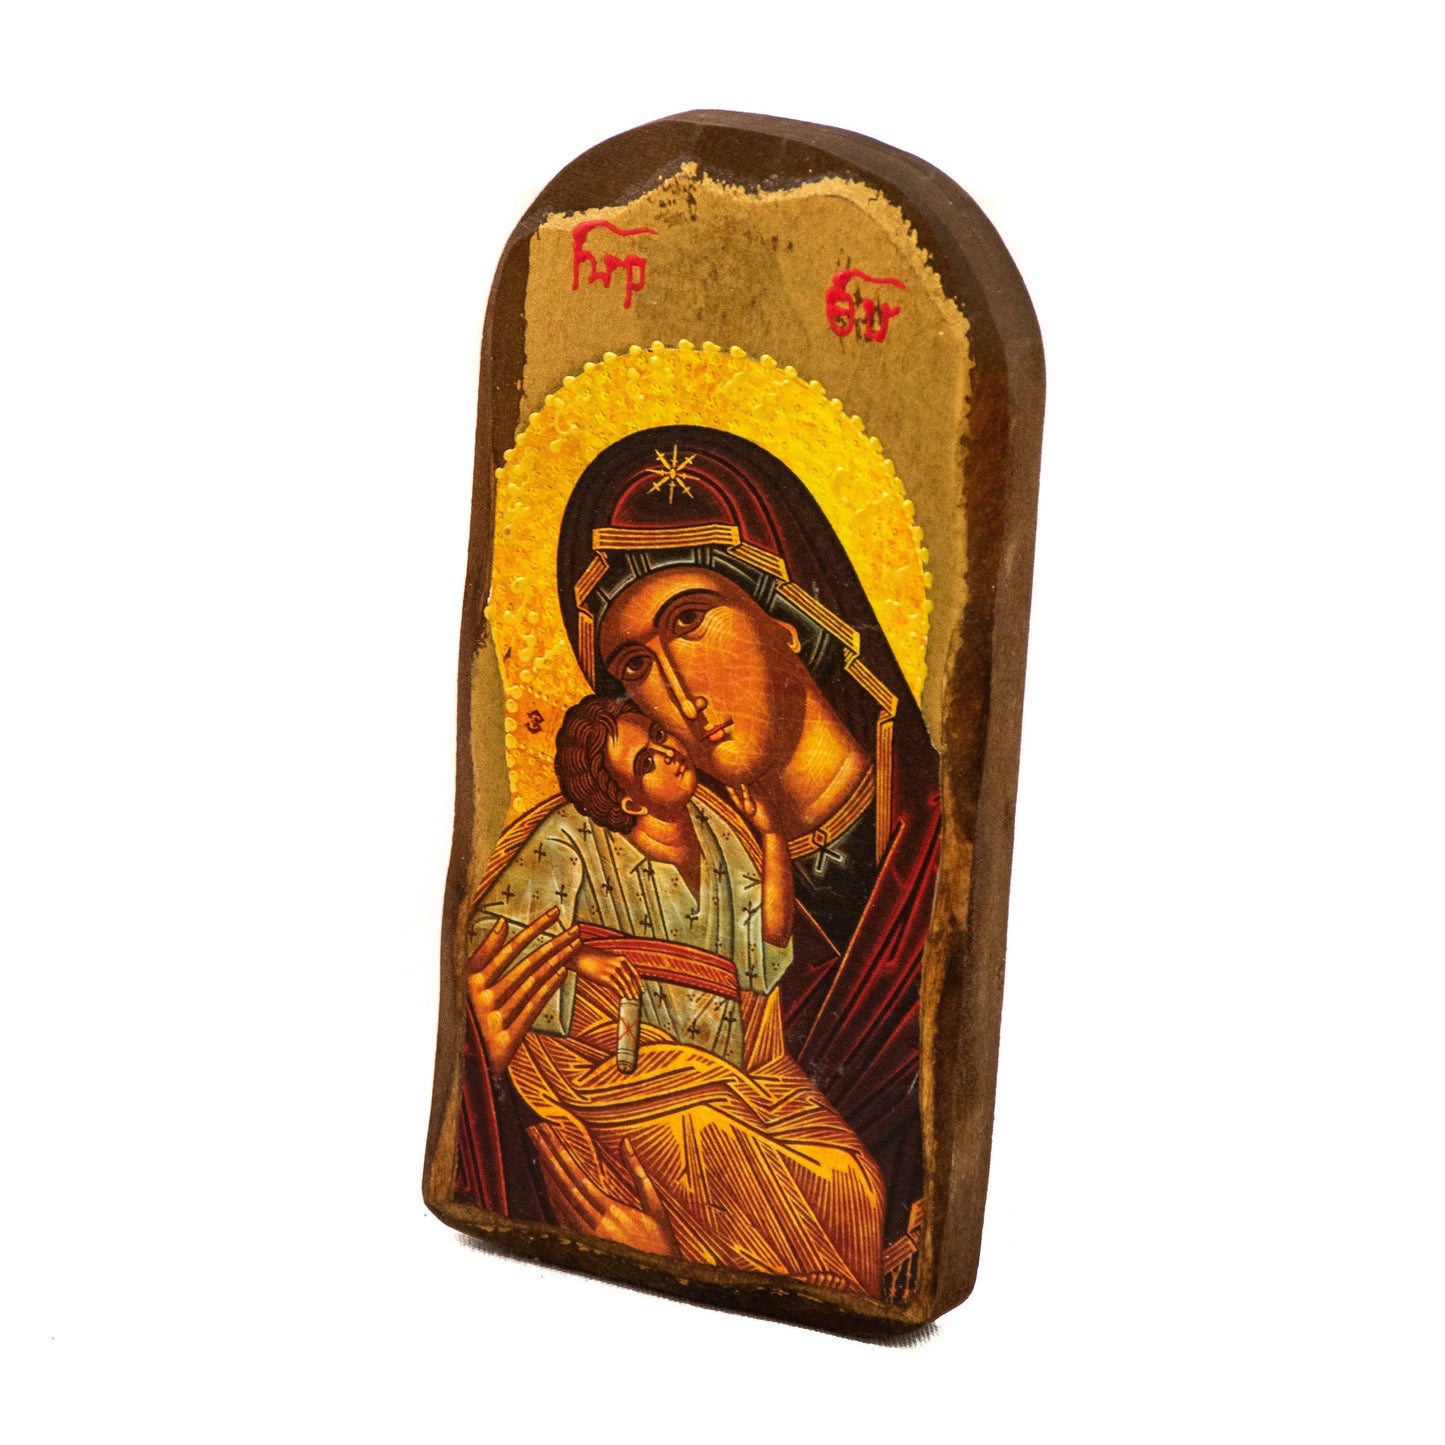 Virgin Mary icon Panagia, Handmade Greek Orthodox Icon of Theotokos, Mother of God Byzantine art wall hanging wood plaque, religious decor TheHolyArt